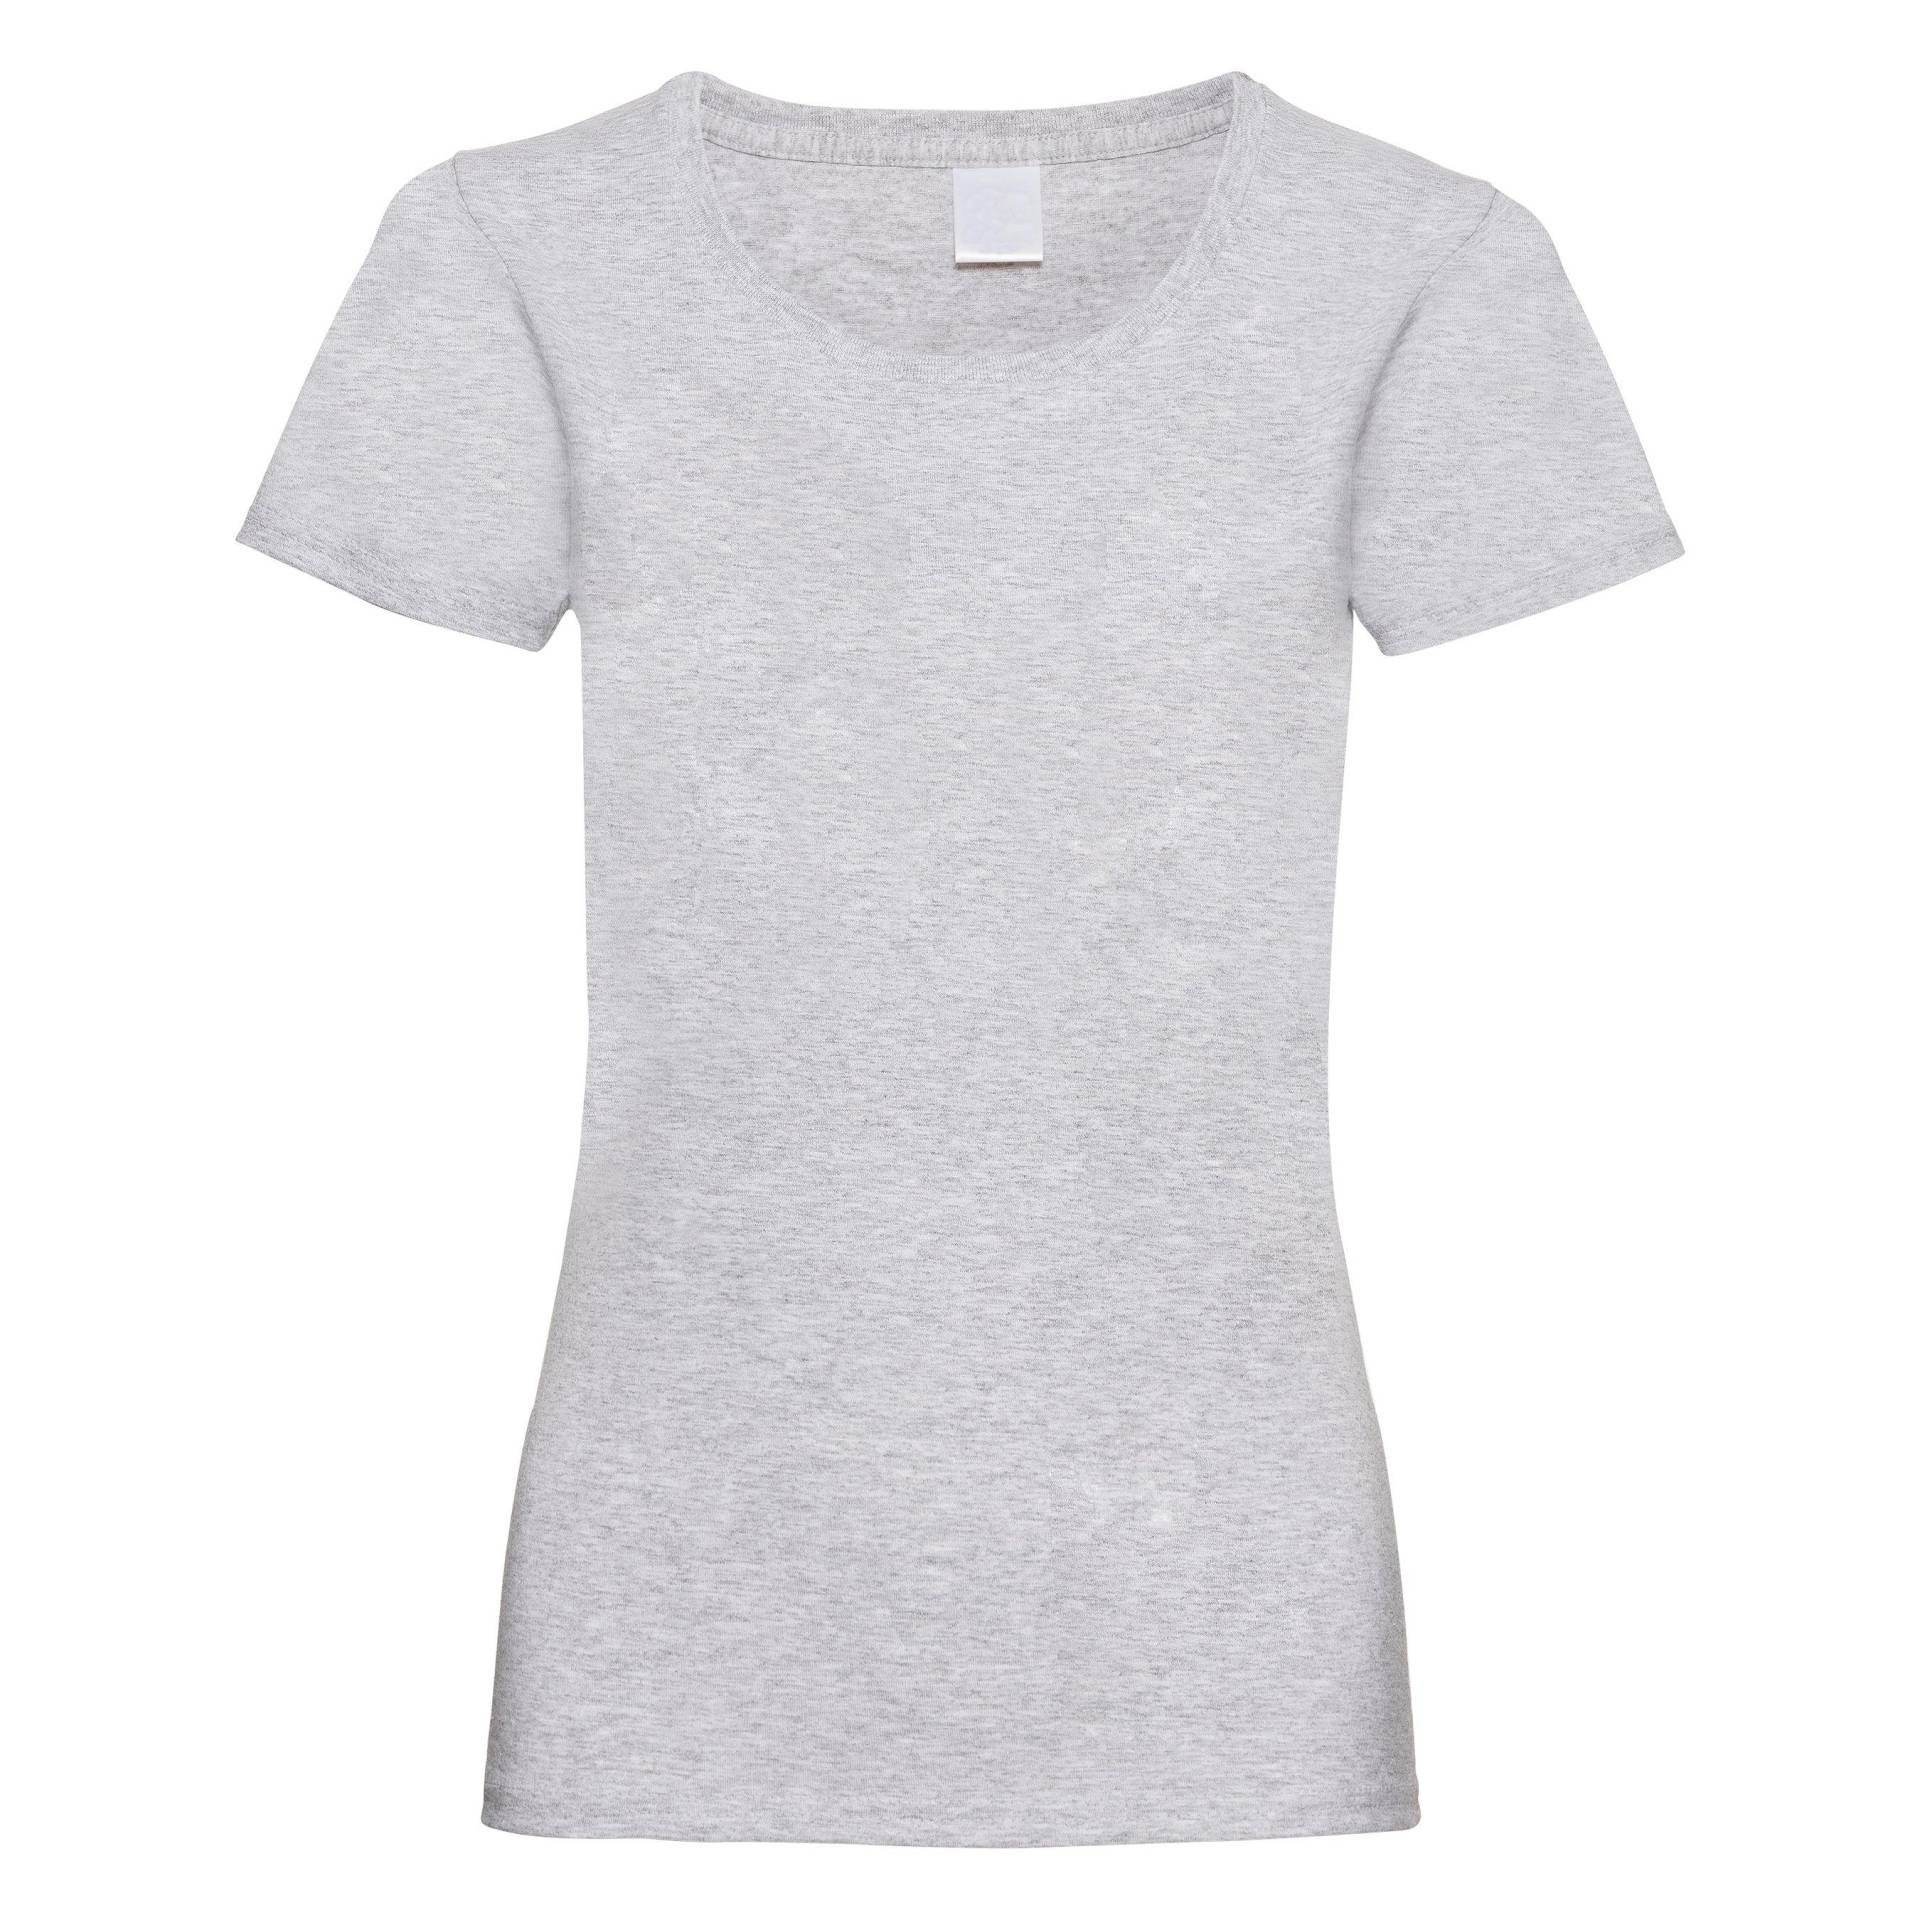 Value Tshirt Damen Taubengrau XL von Universal Textiles